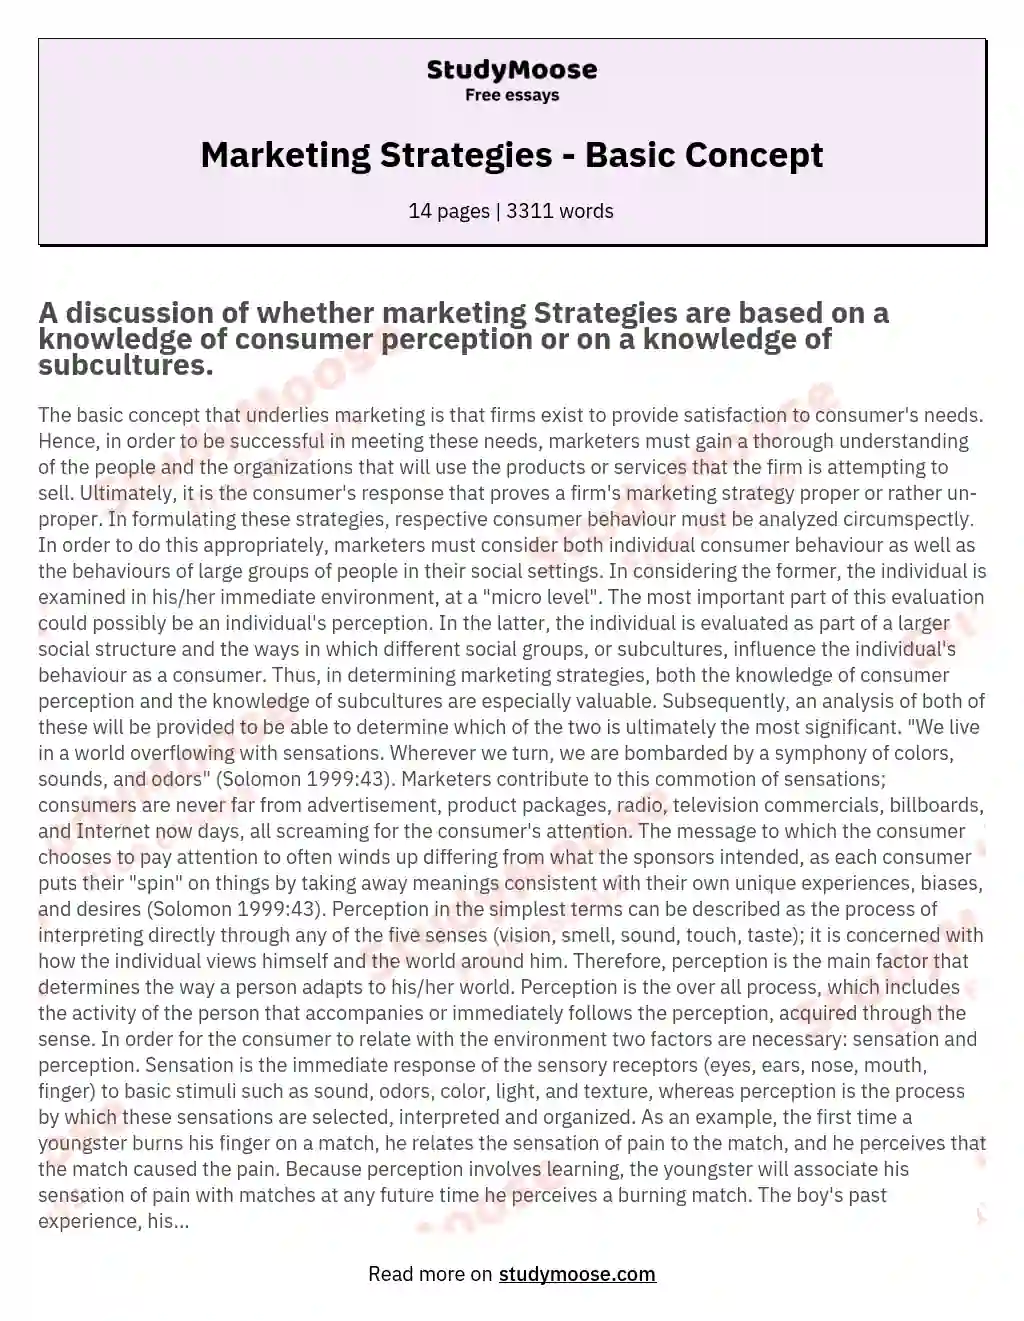 Marketing Strategies - Basic Concept essay